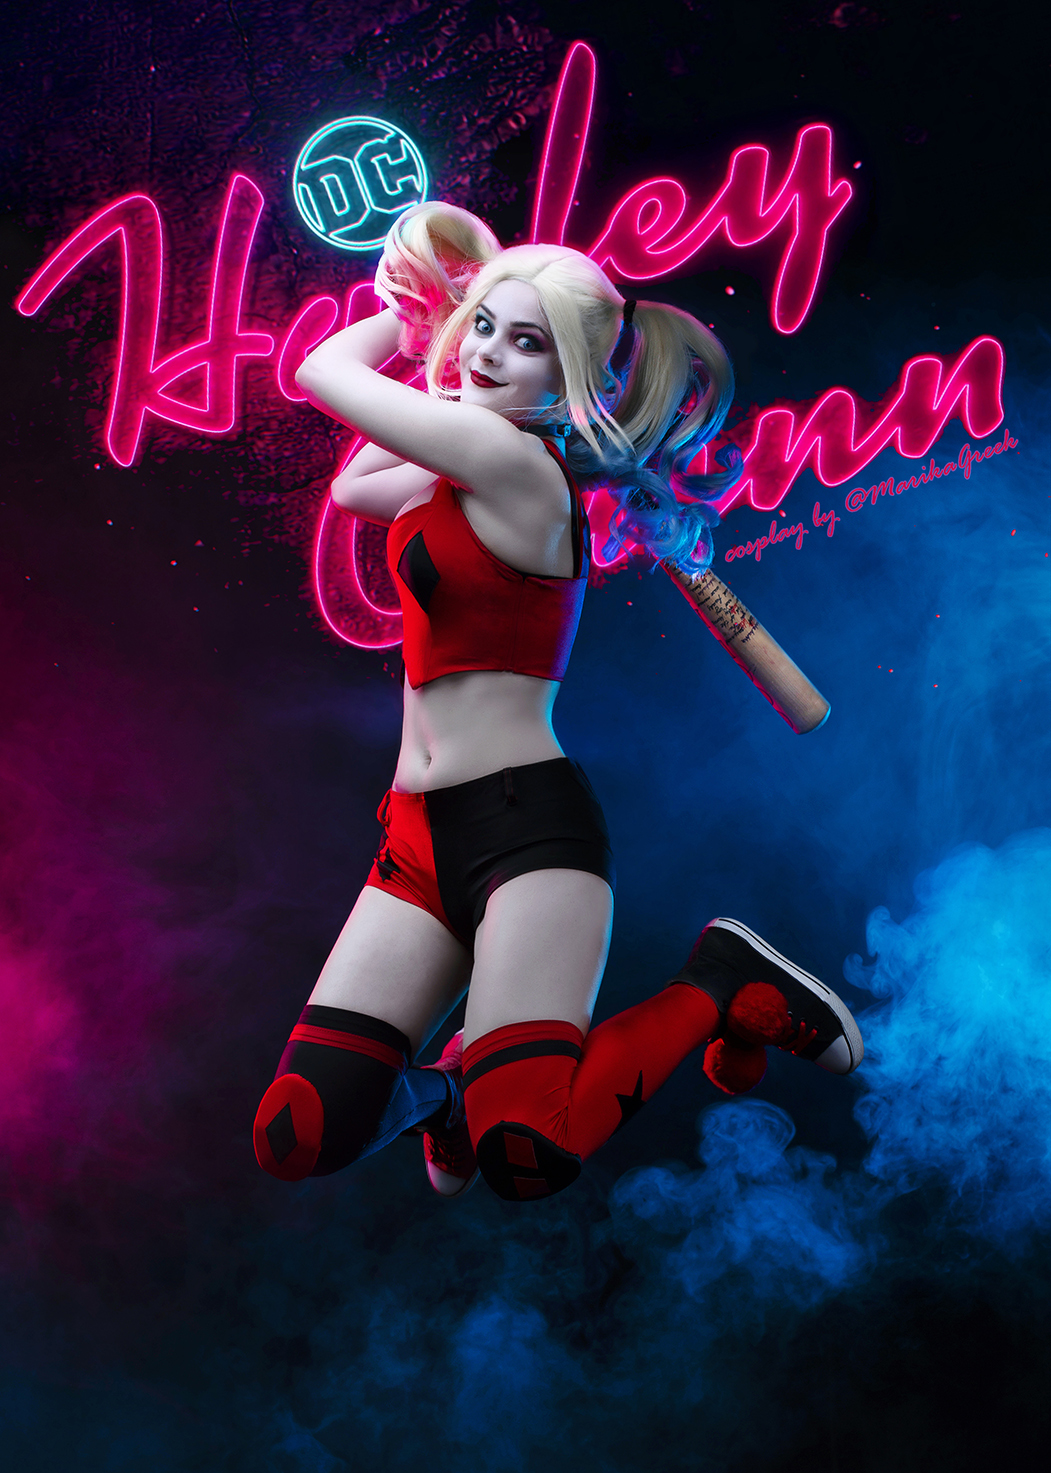 Harley Quinn by MarikaGreek - Harley quinn, Cosplay, Dc comics, Longpost